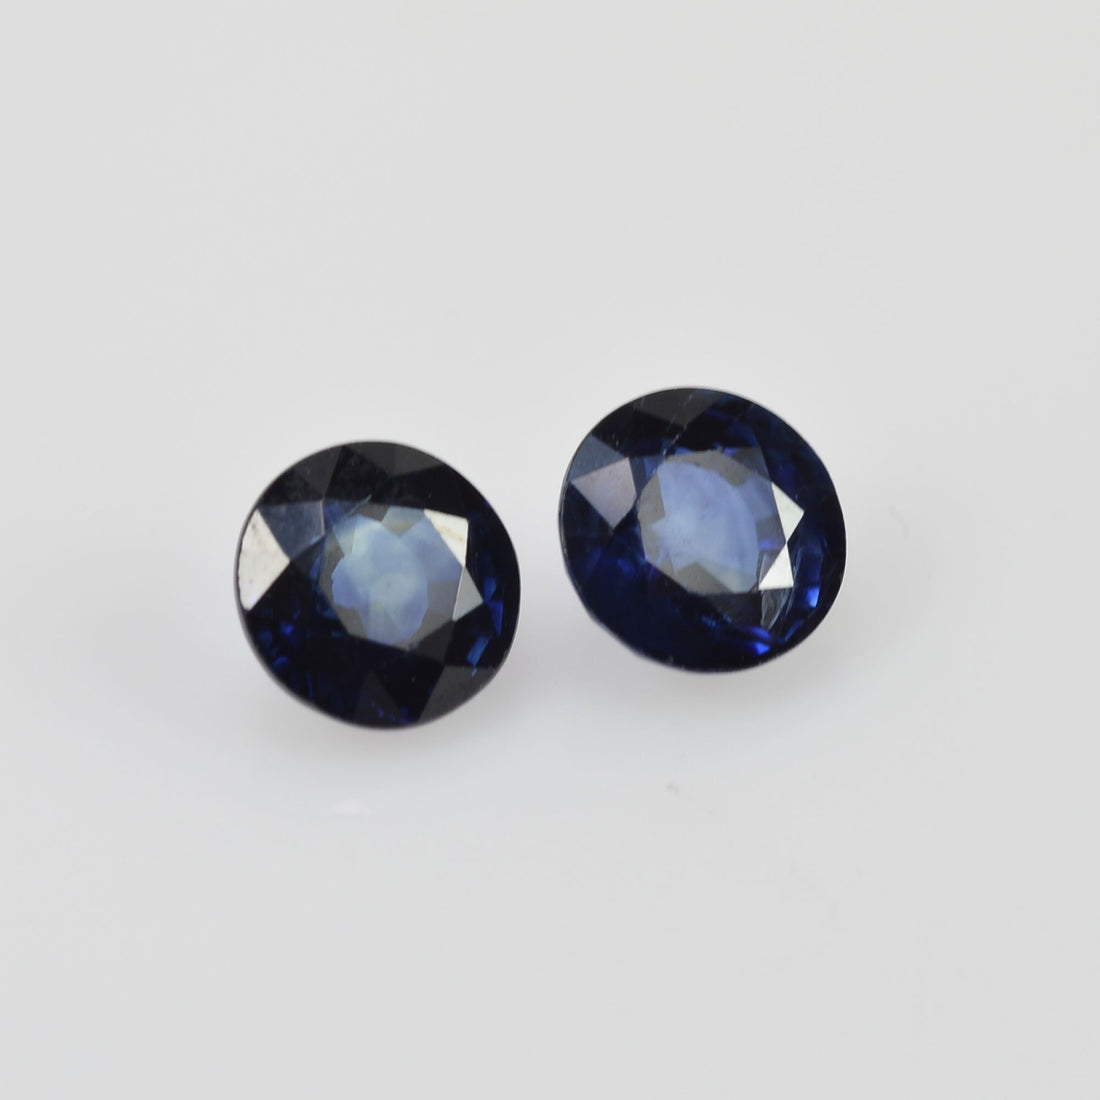 4.5 mm Natural Blue Sapphire Loose Pair Gemstone Round Cut